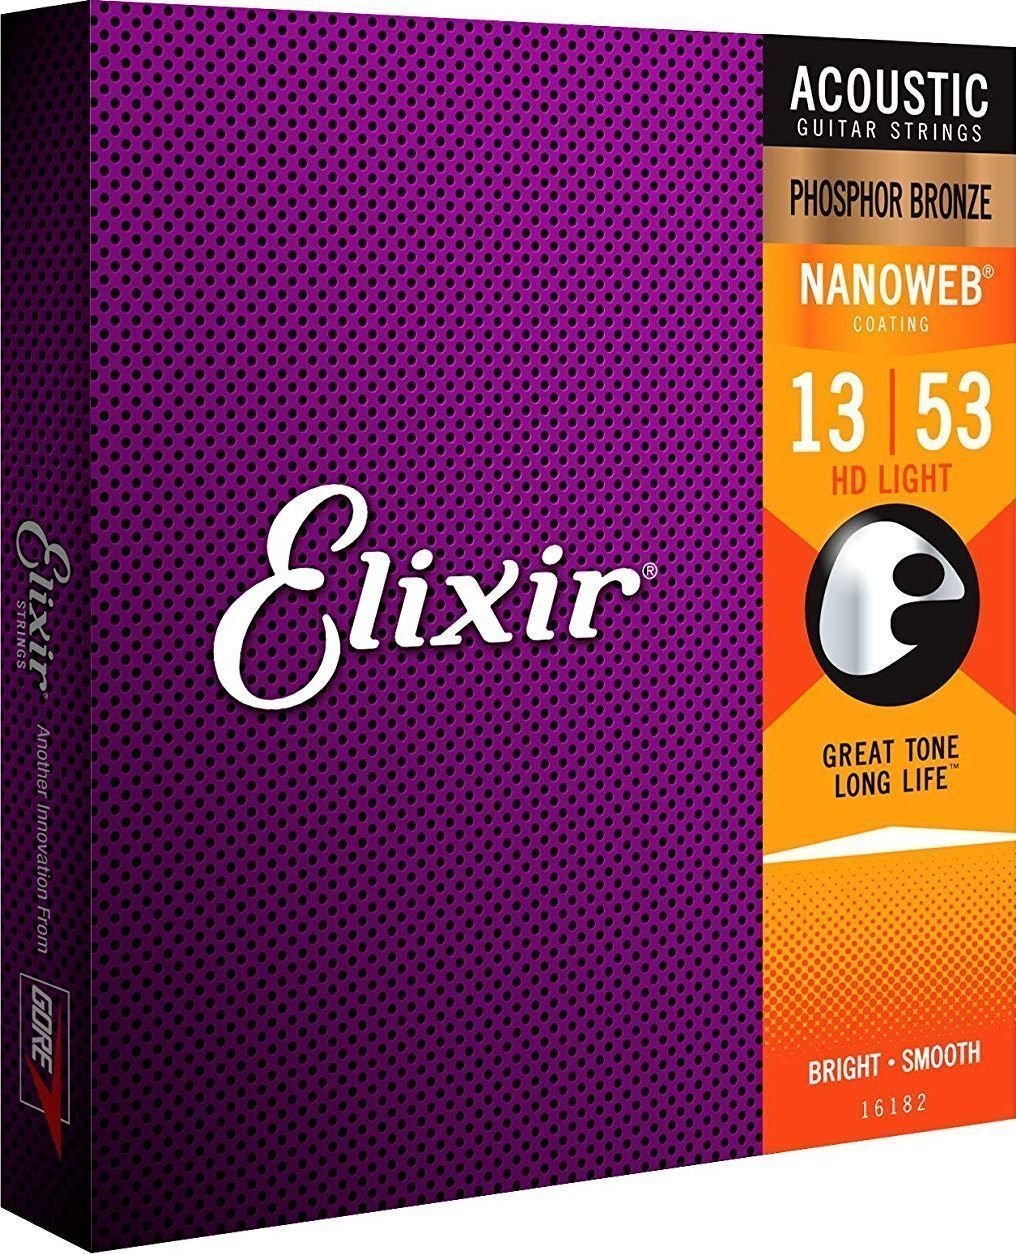 Guitar strings Elixir 16182 Nanoweb 13-53